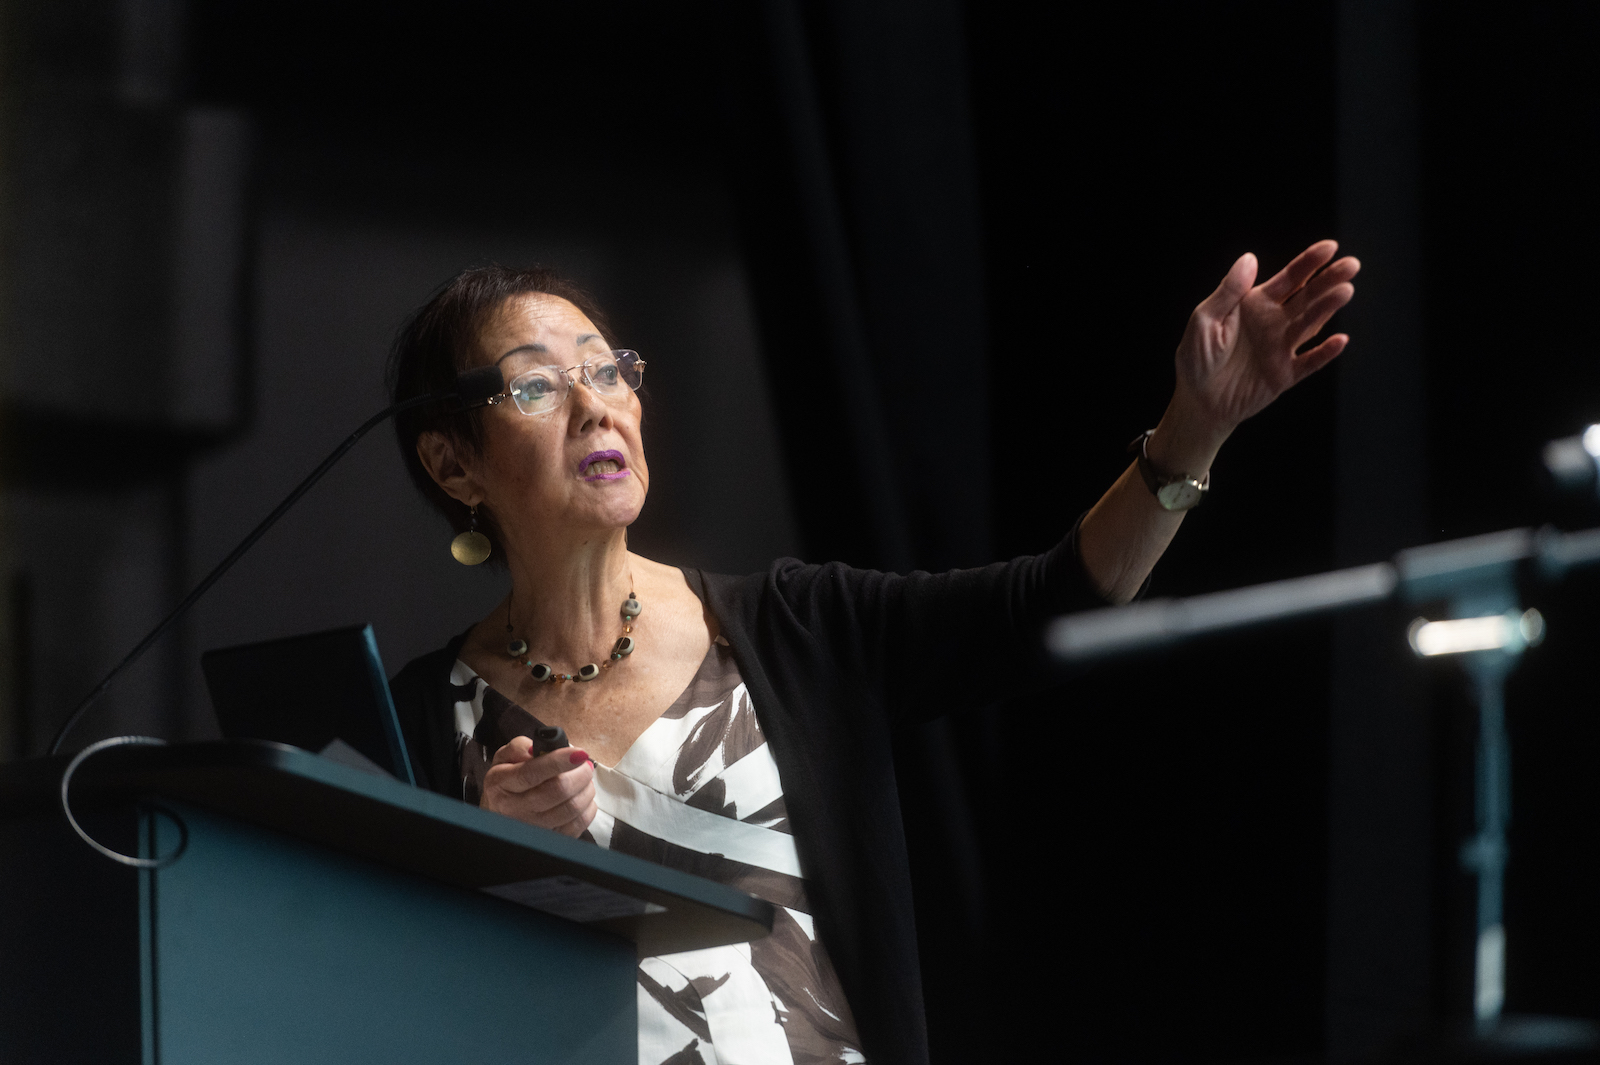 Speaker Evelyn Hu-DeHart at the 2022 Diversity Symposium